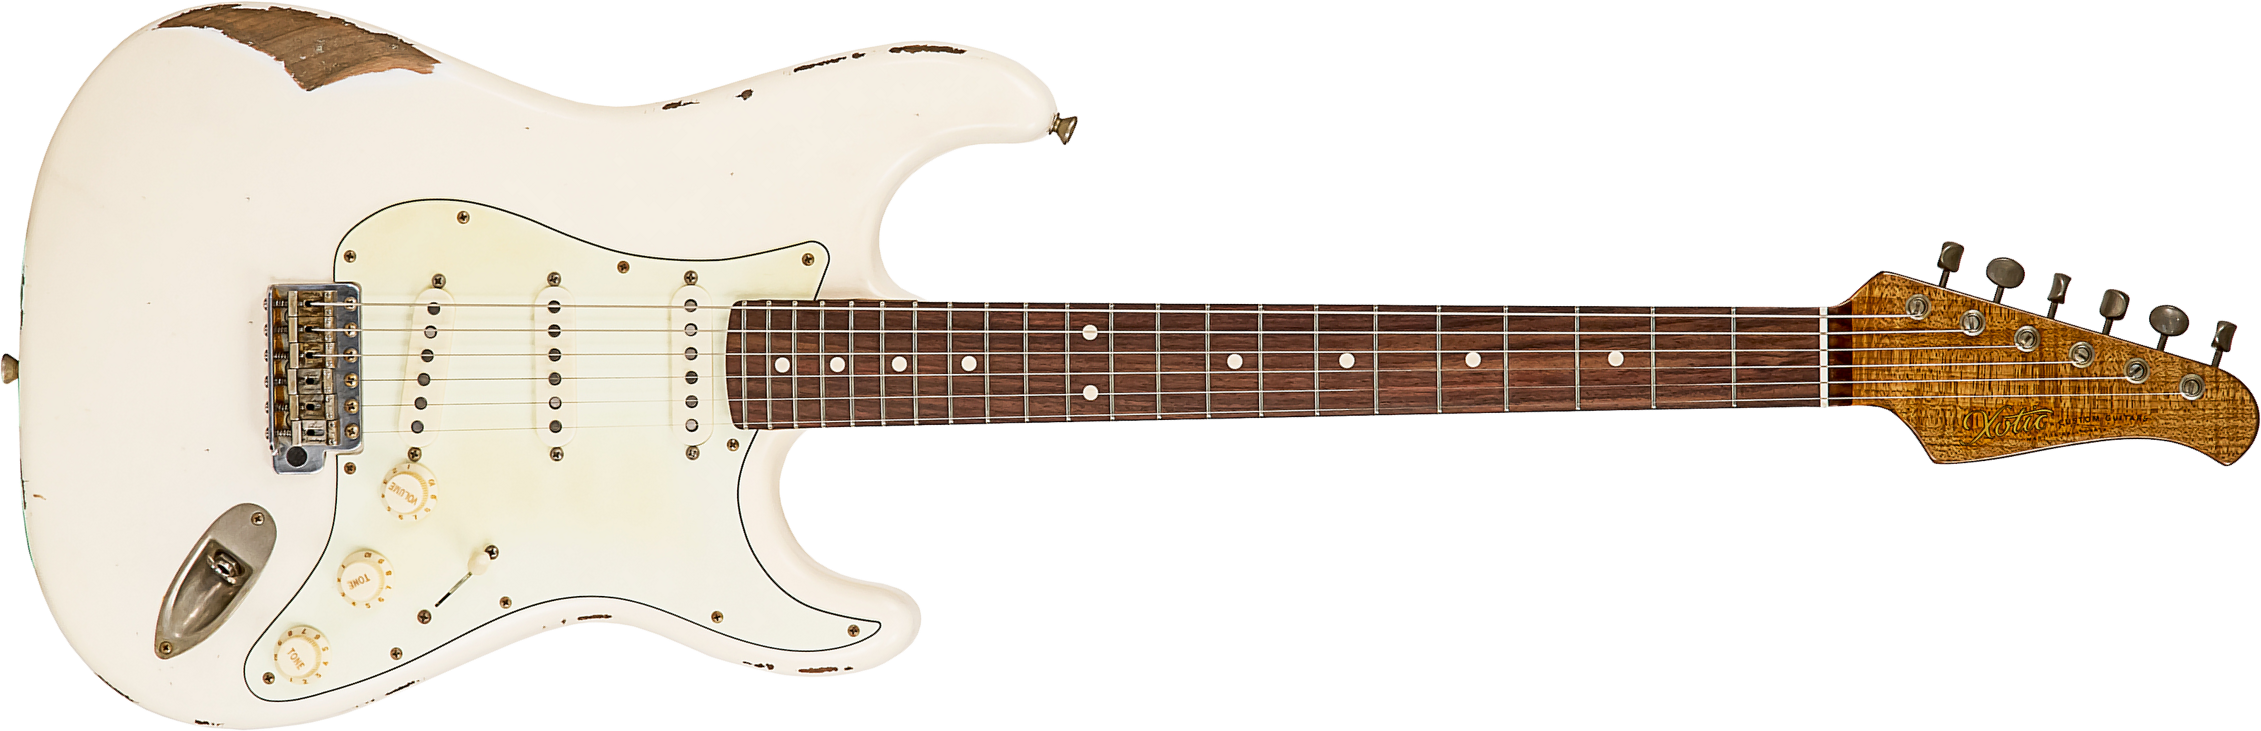 Xotic Xsc-1 Alder California Class 3s Rw #1624r - Heavy Aging Vintage White - Str shape electric guitar - Main picture